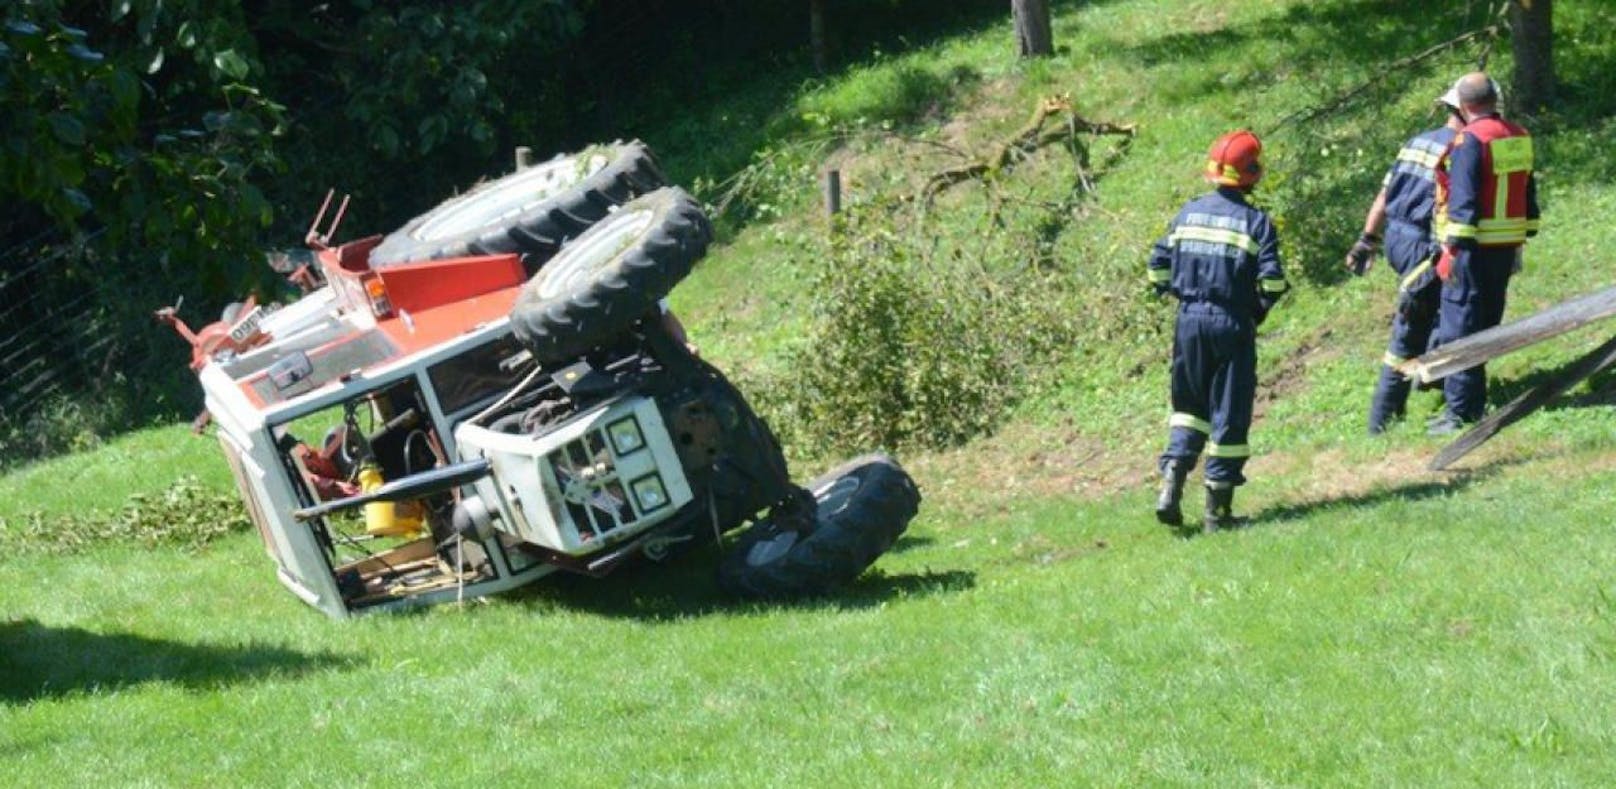 Traktor-Lenker telefoniert während Fahrt und baut Crash